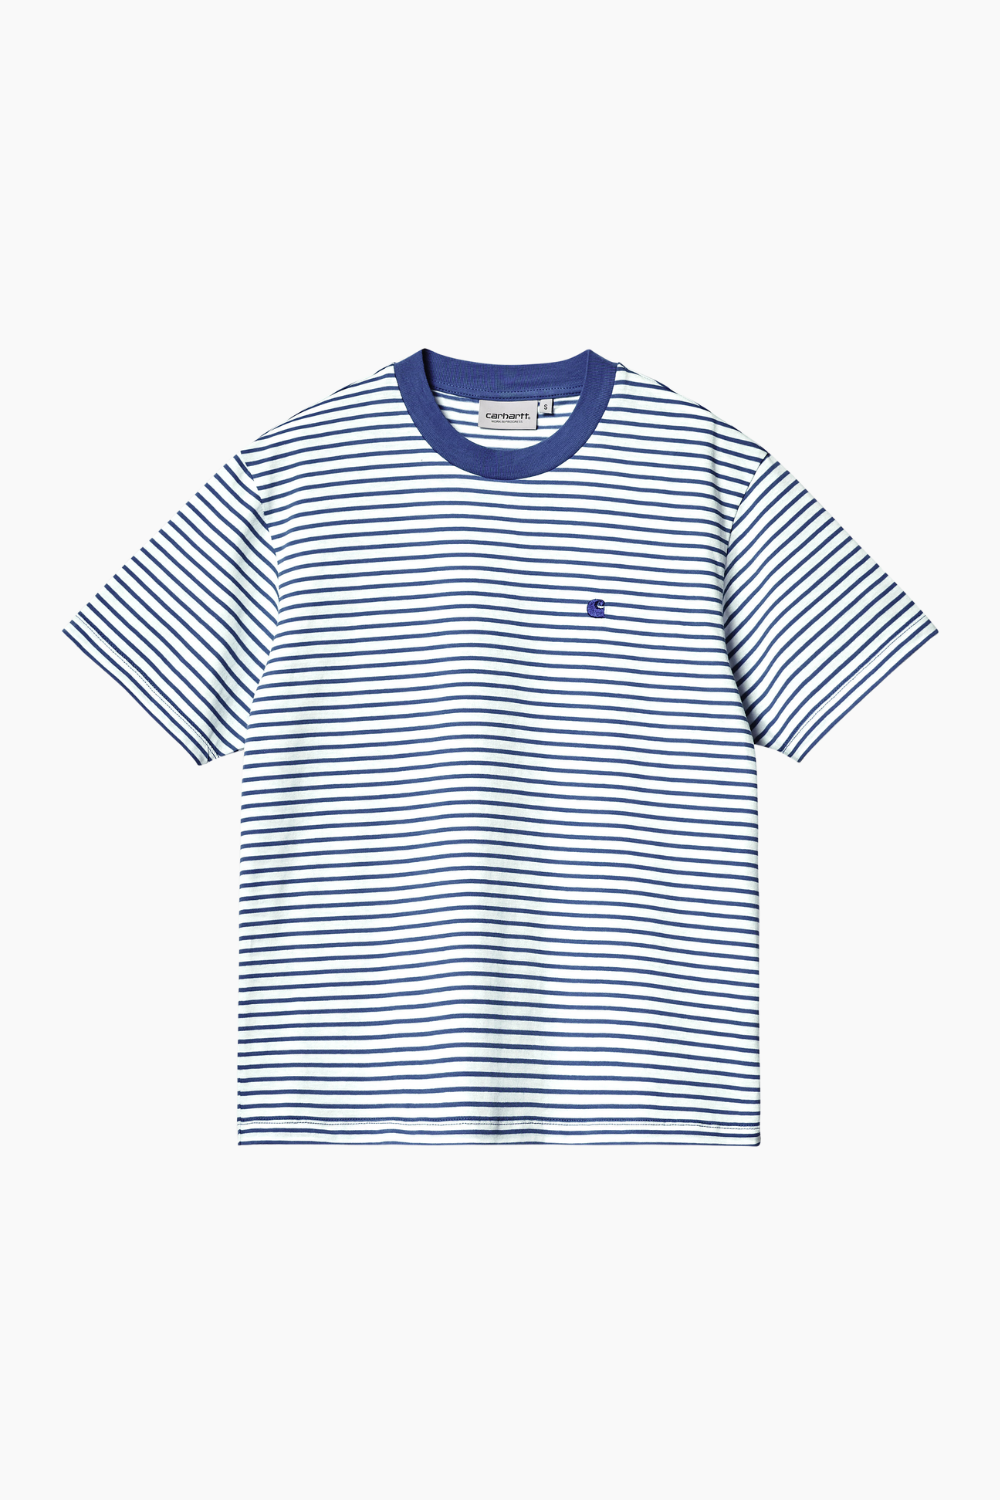 W' S/S Coleen T-Shirt - Coleen Stripe, White/Acapulco - Carhartt WIP